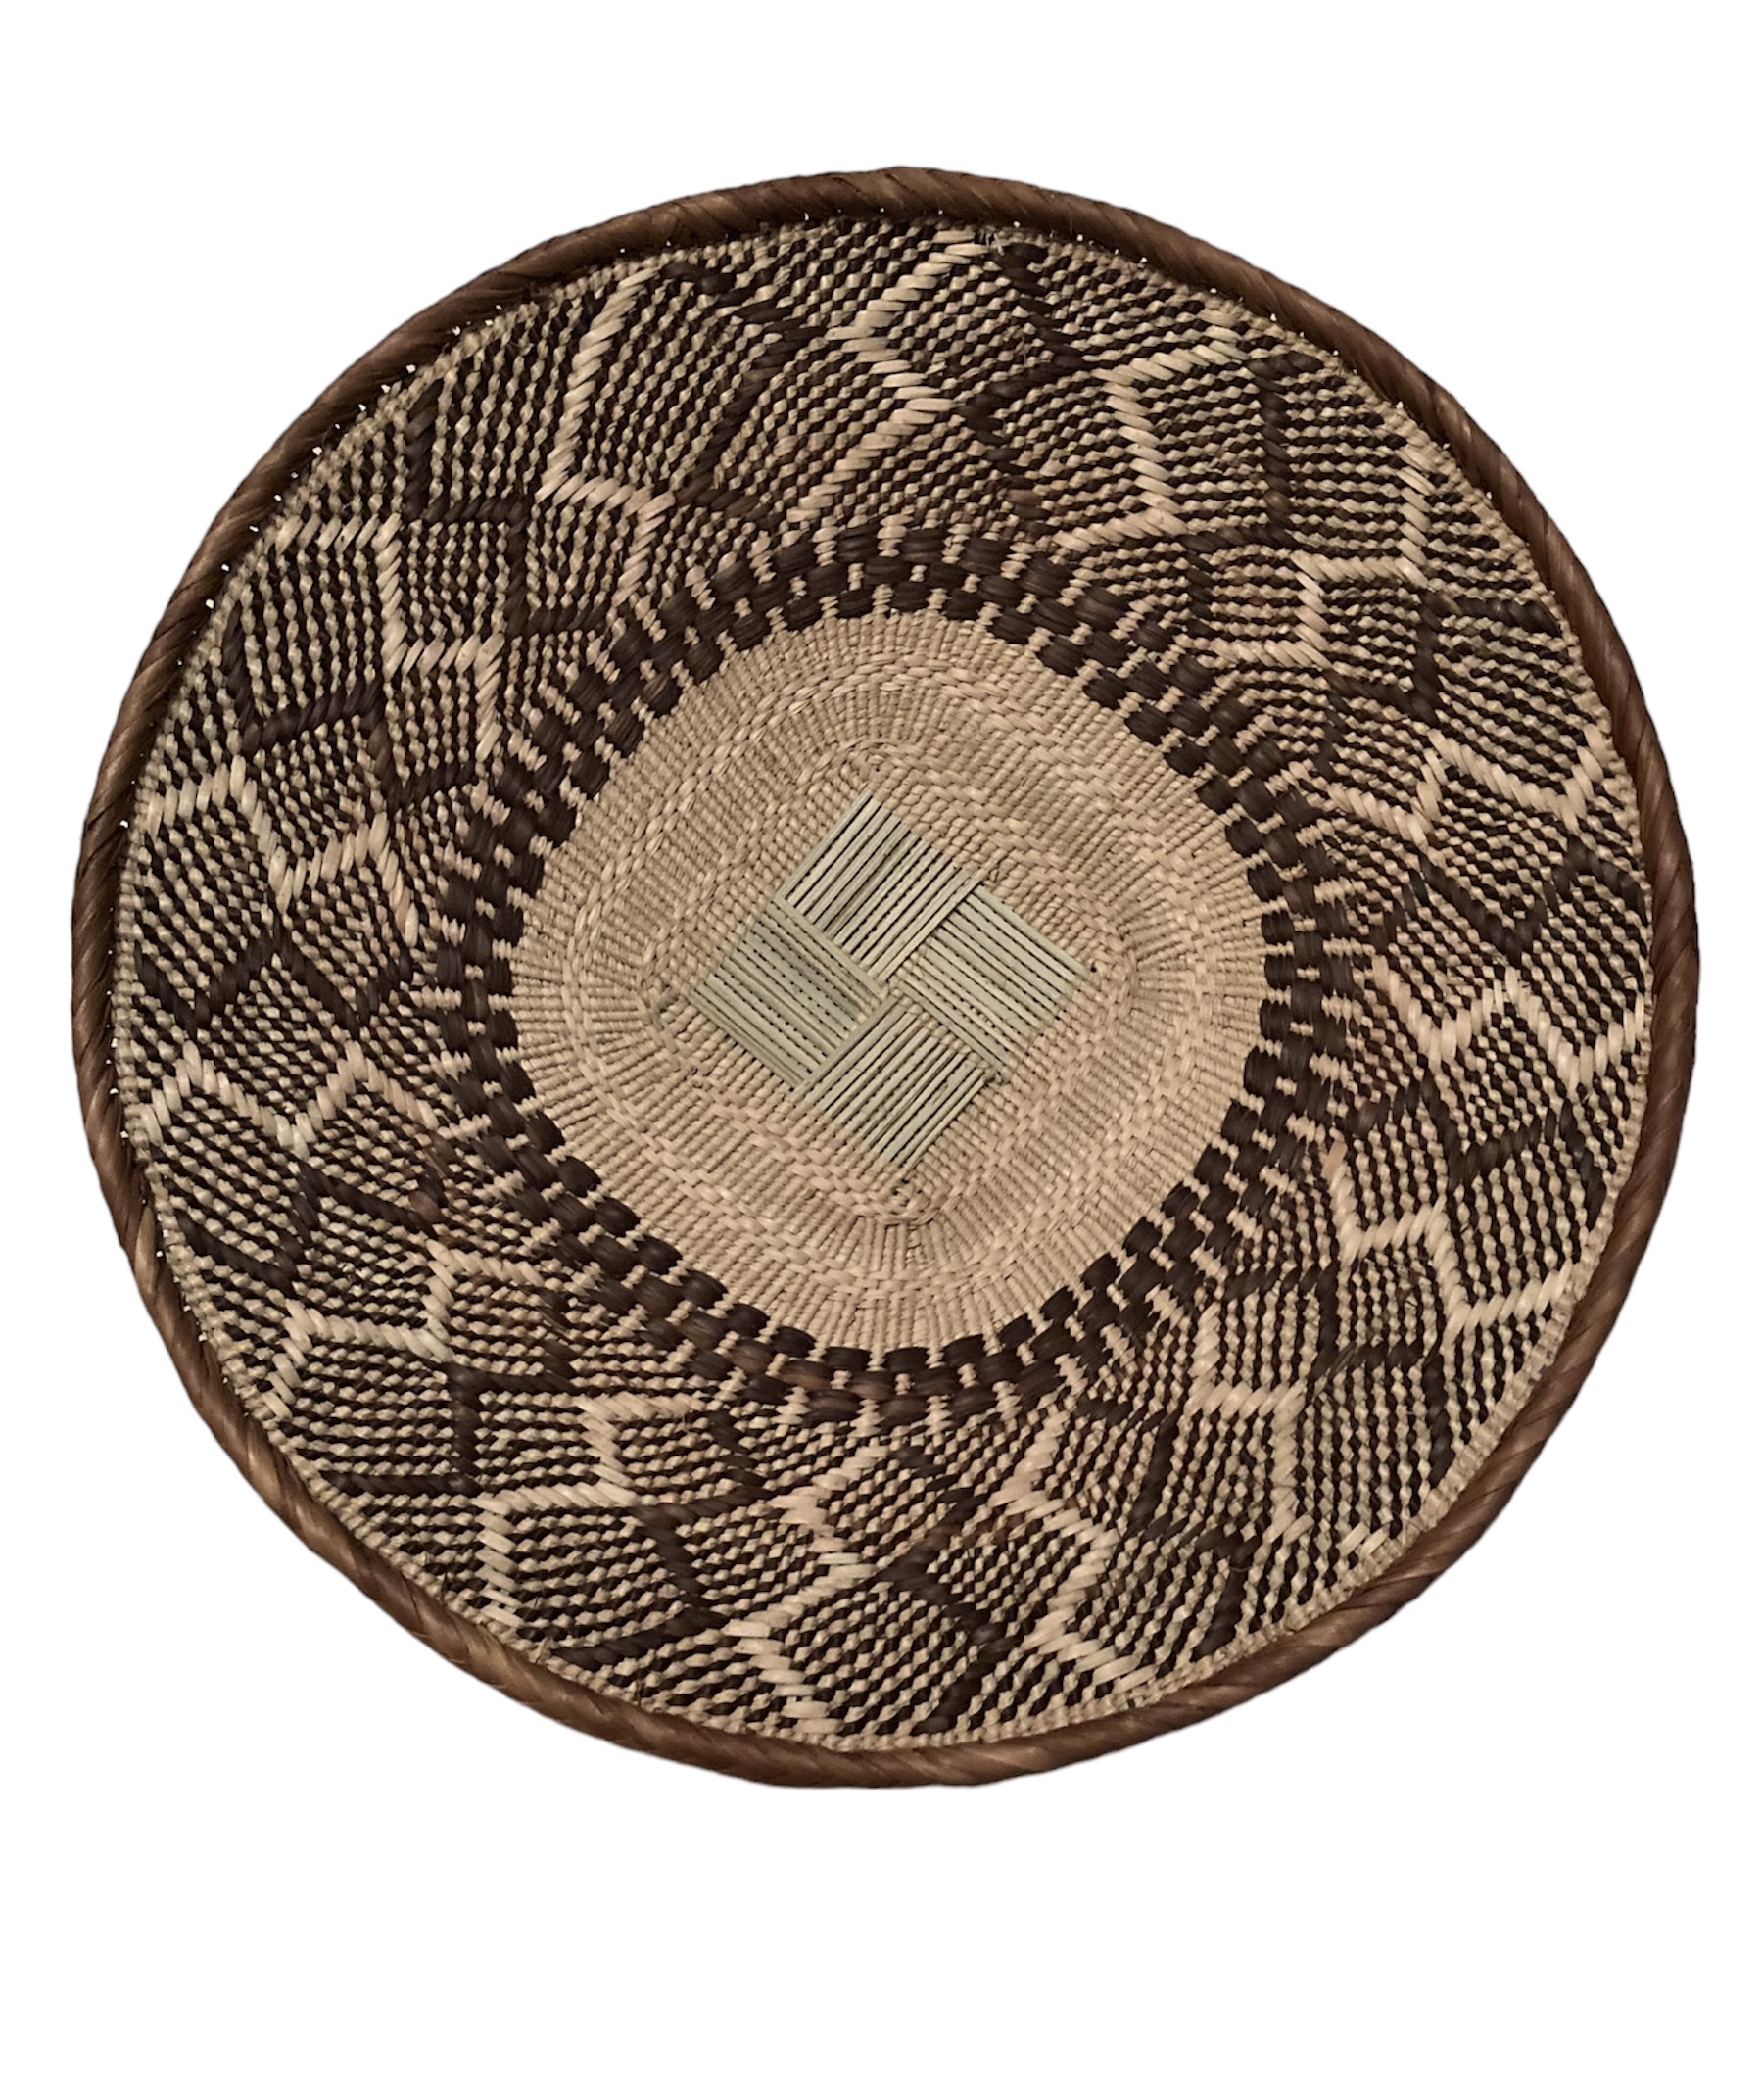 Tonga Basket from Zimbabwe - Design #009 - 15 /12" dia.